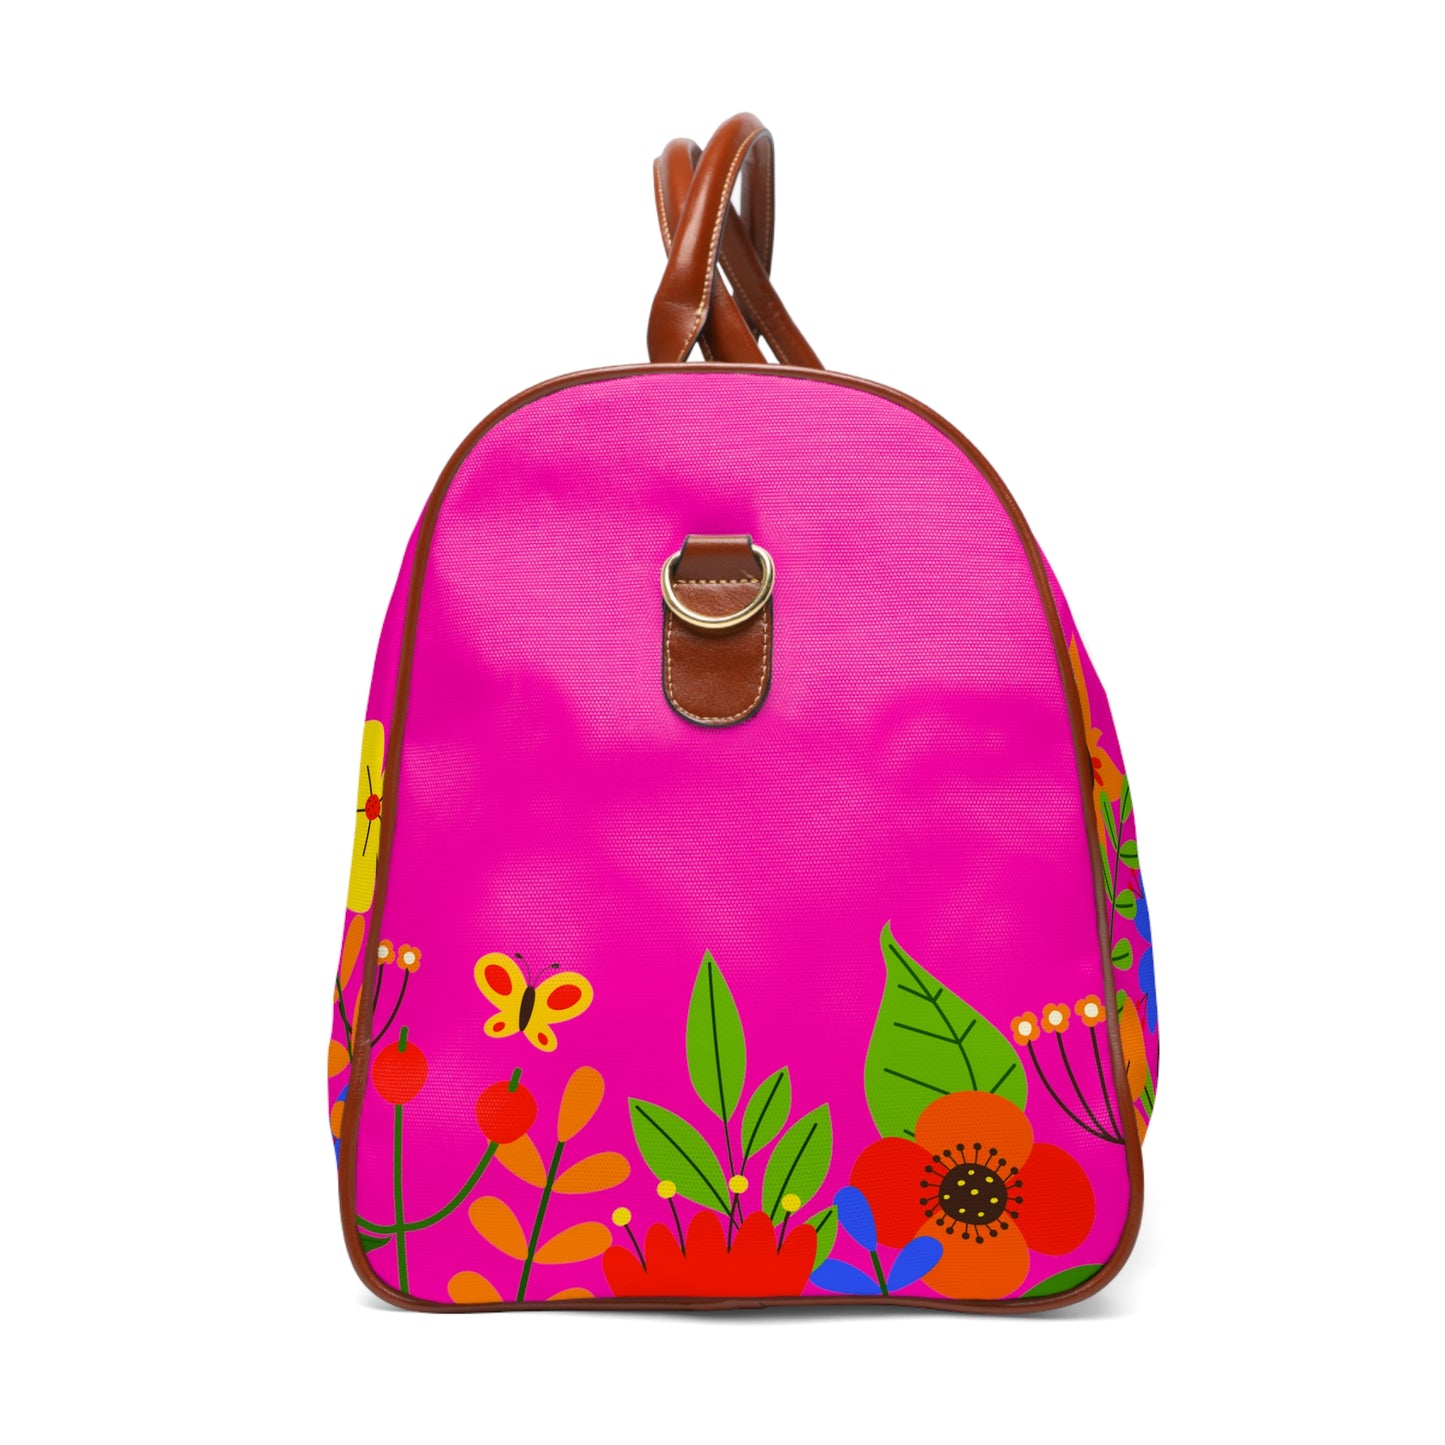 Bright Summer flowers - Mean Girls Lipstick ff00a8 - Waterproof Travel Bag